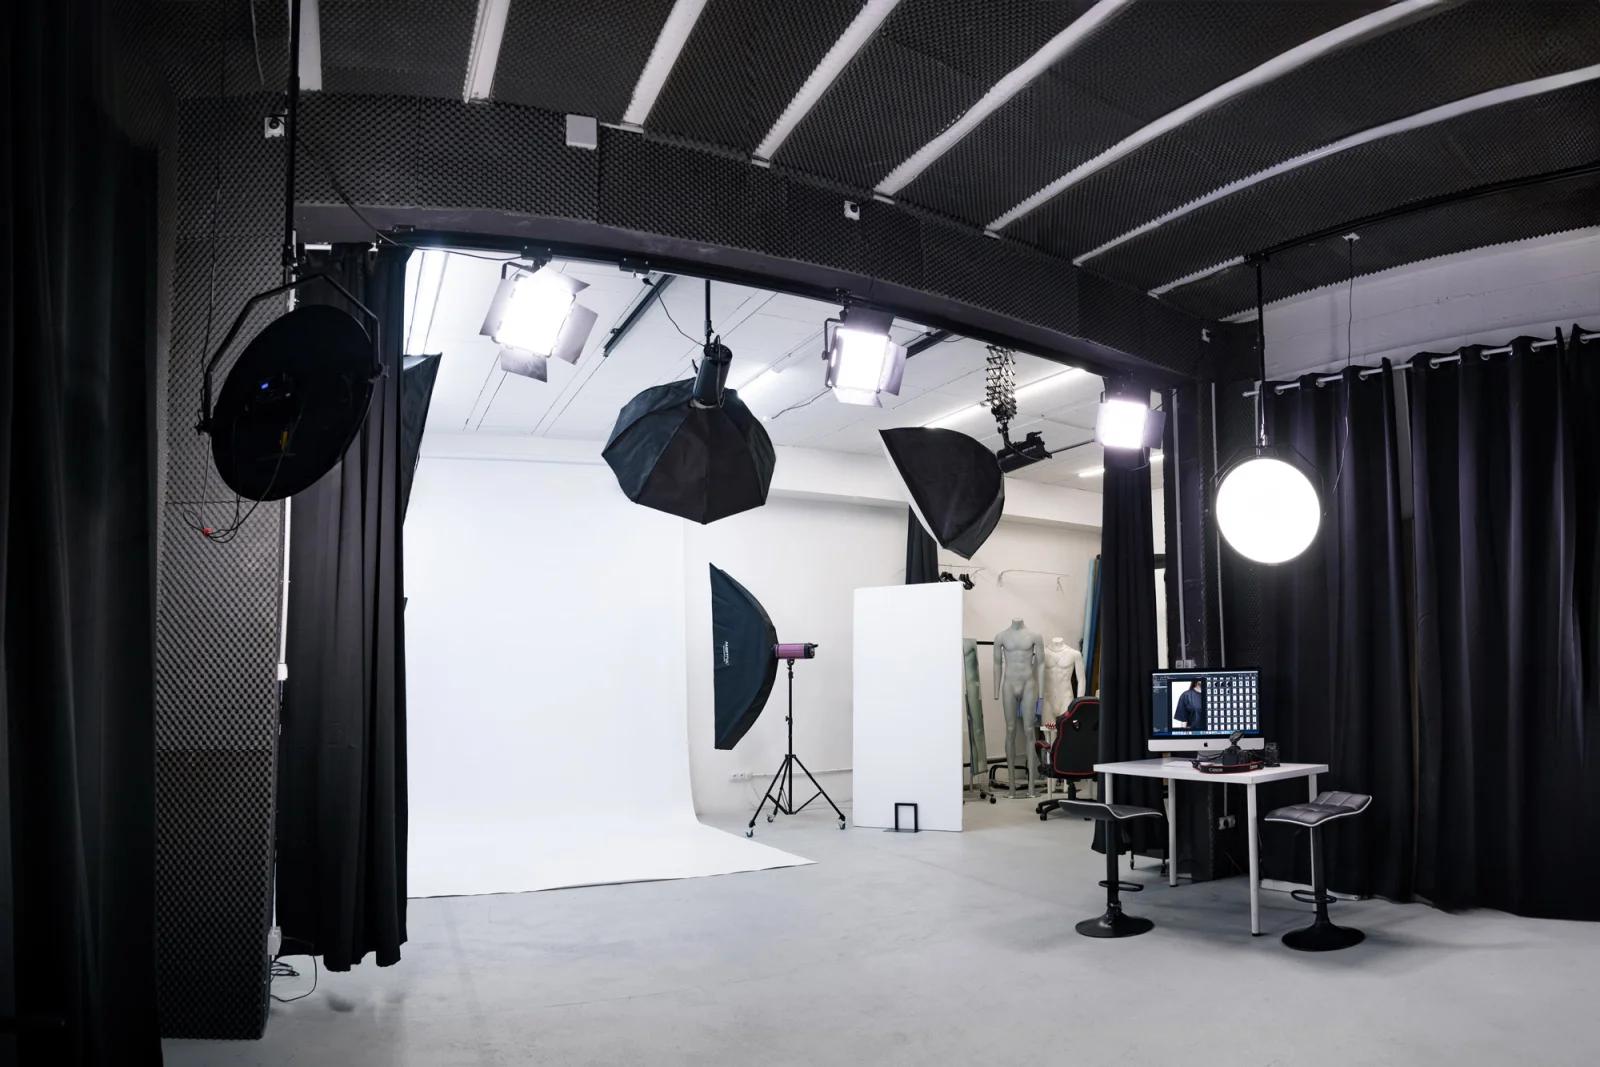 Space Photo/video studio - Casting area - Gallery - 0